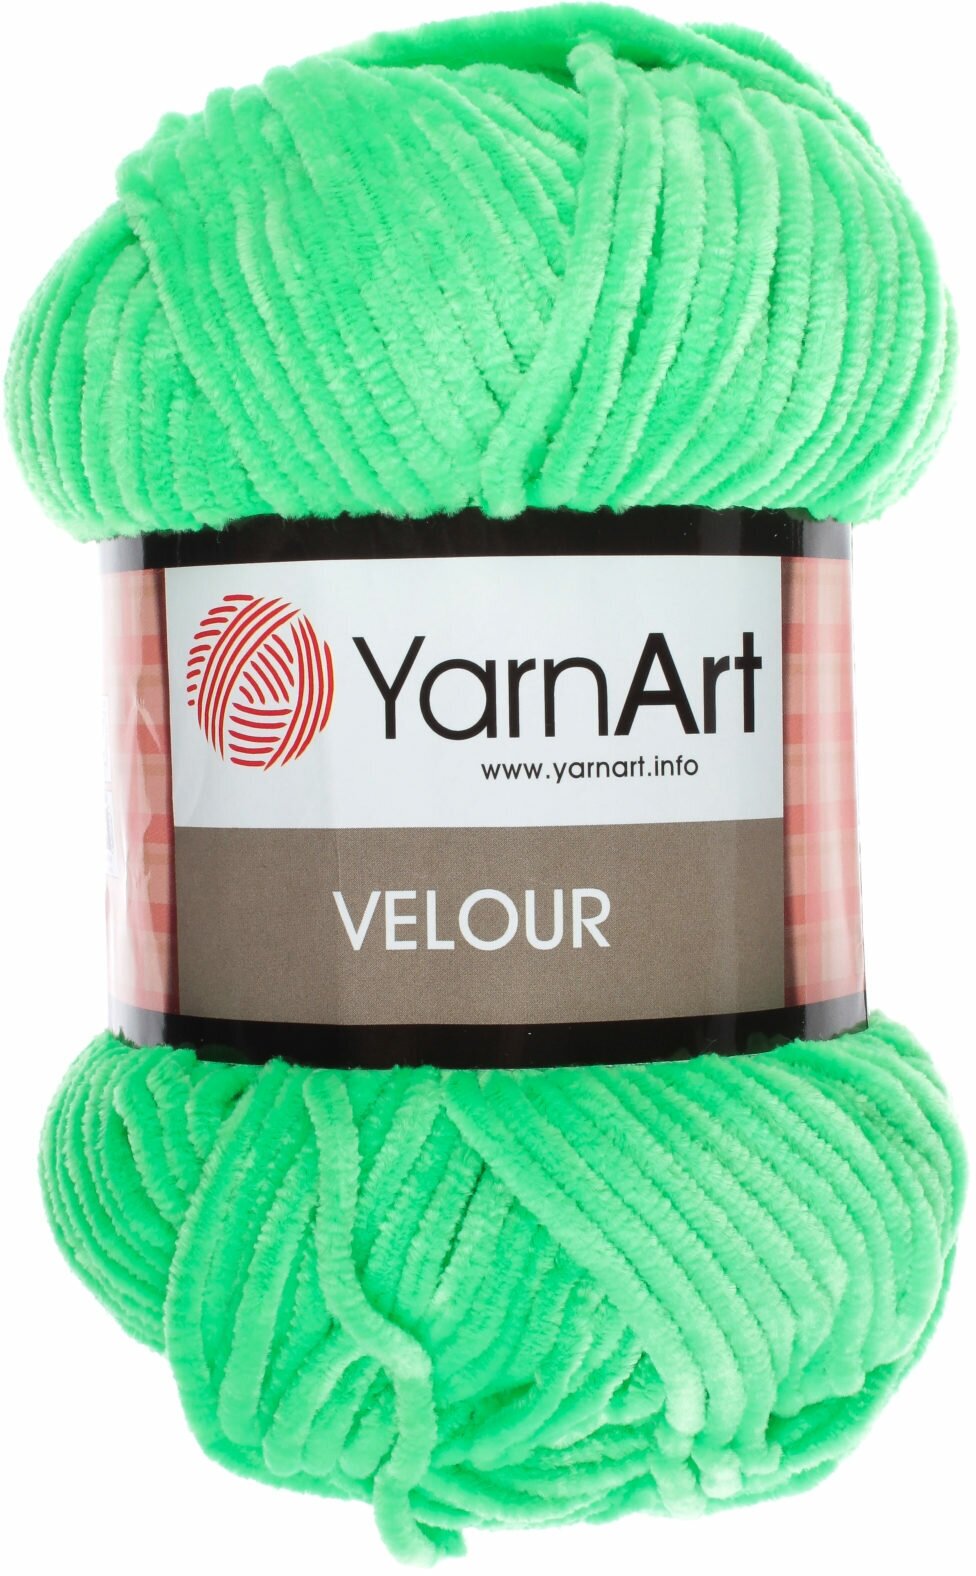  YarnArt Velour - (861), 100%, 170, 100, 2